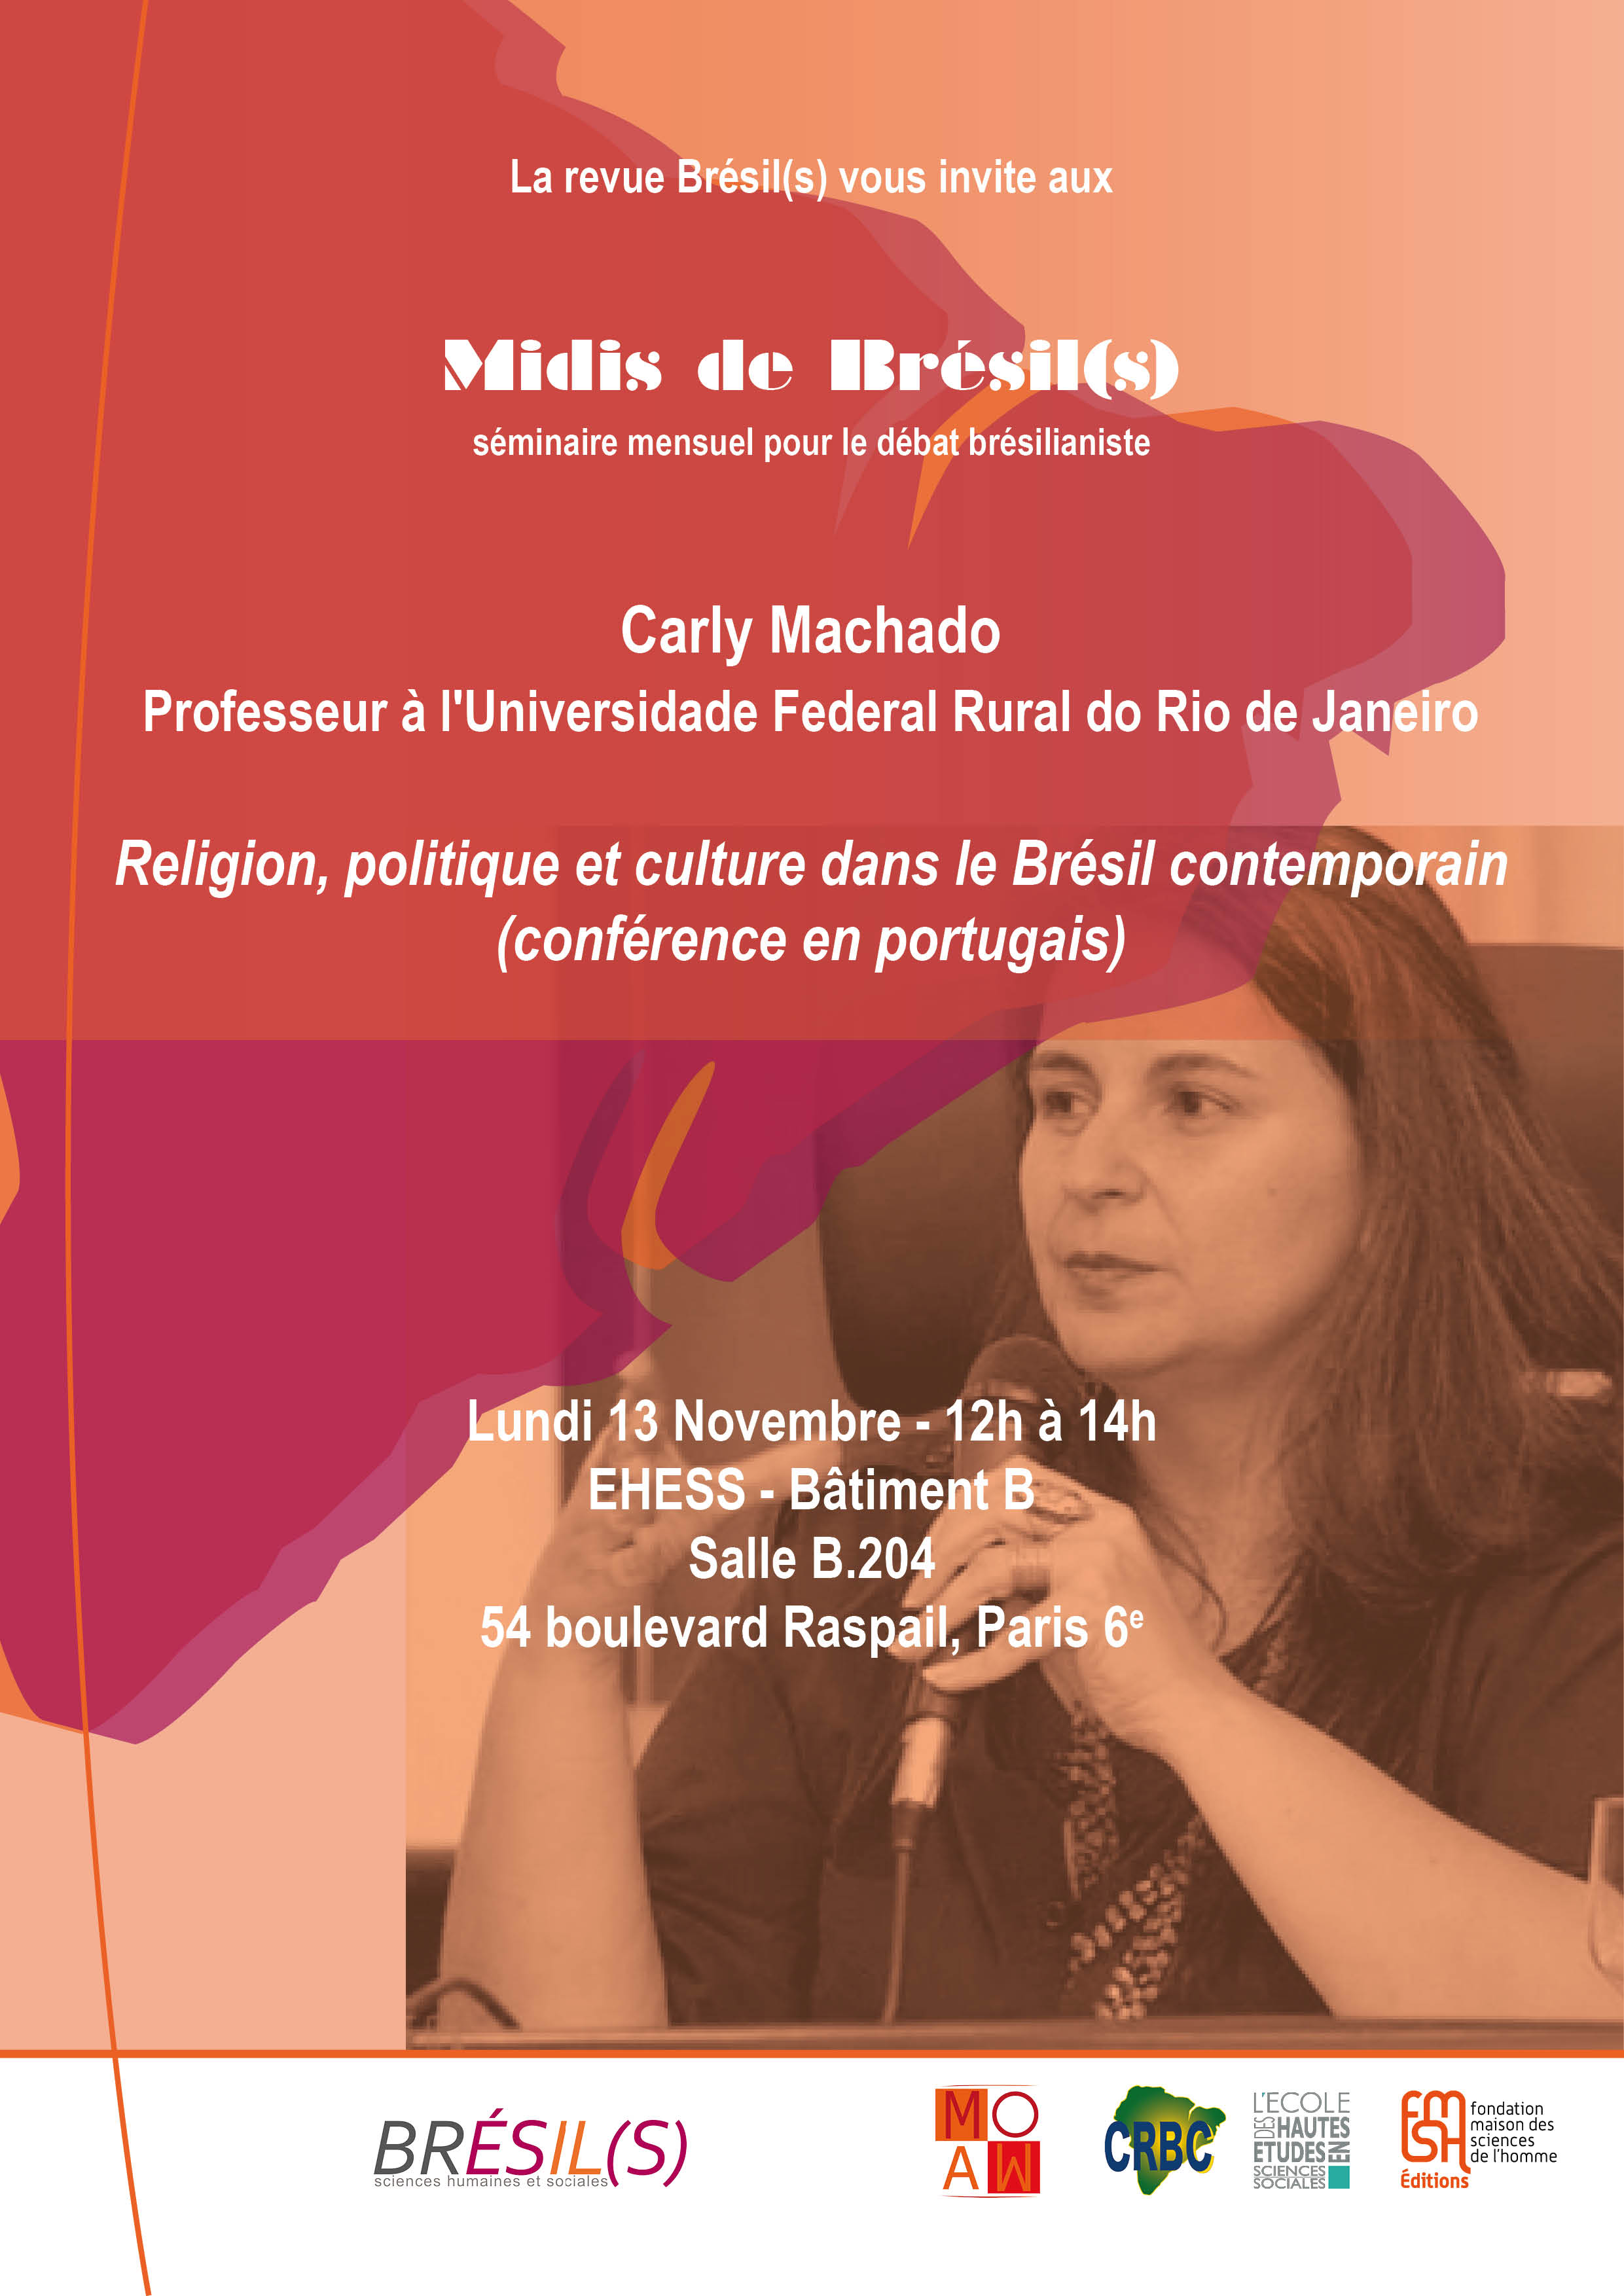 Les Midis de Brésil(s) - Carly Machado Professeur à l'Universidade Federal Rural do Rio de Janeiro